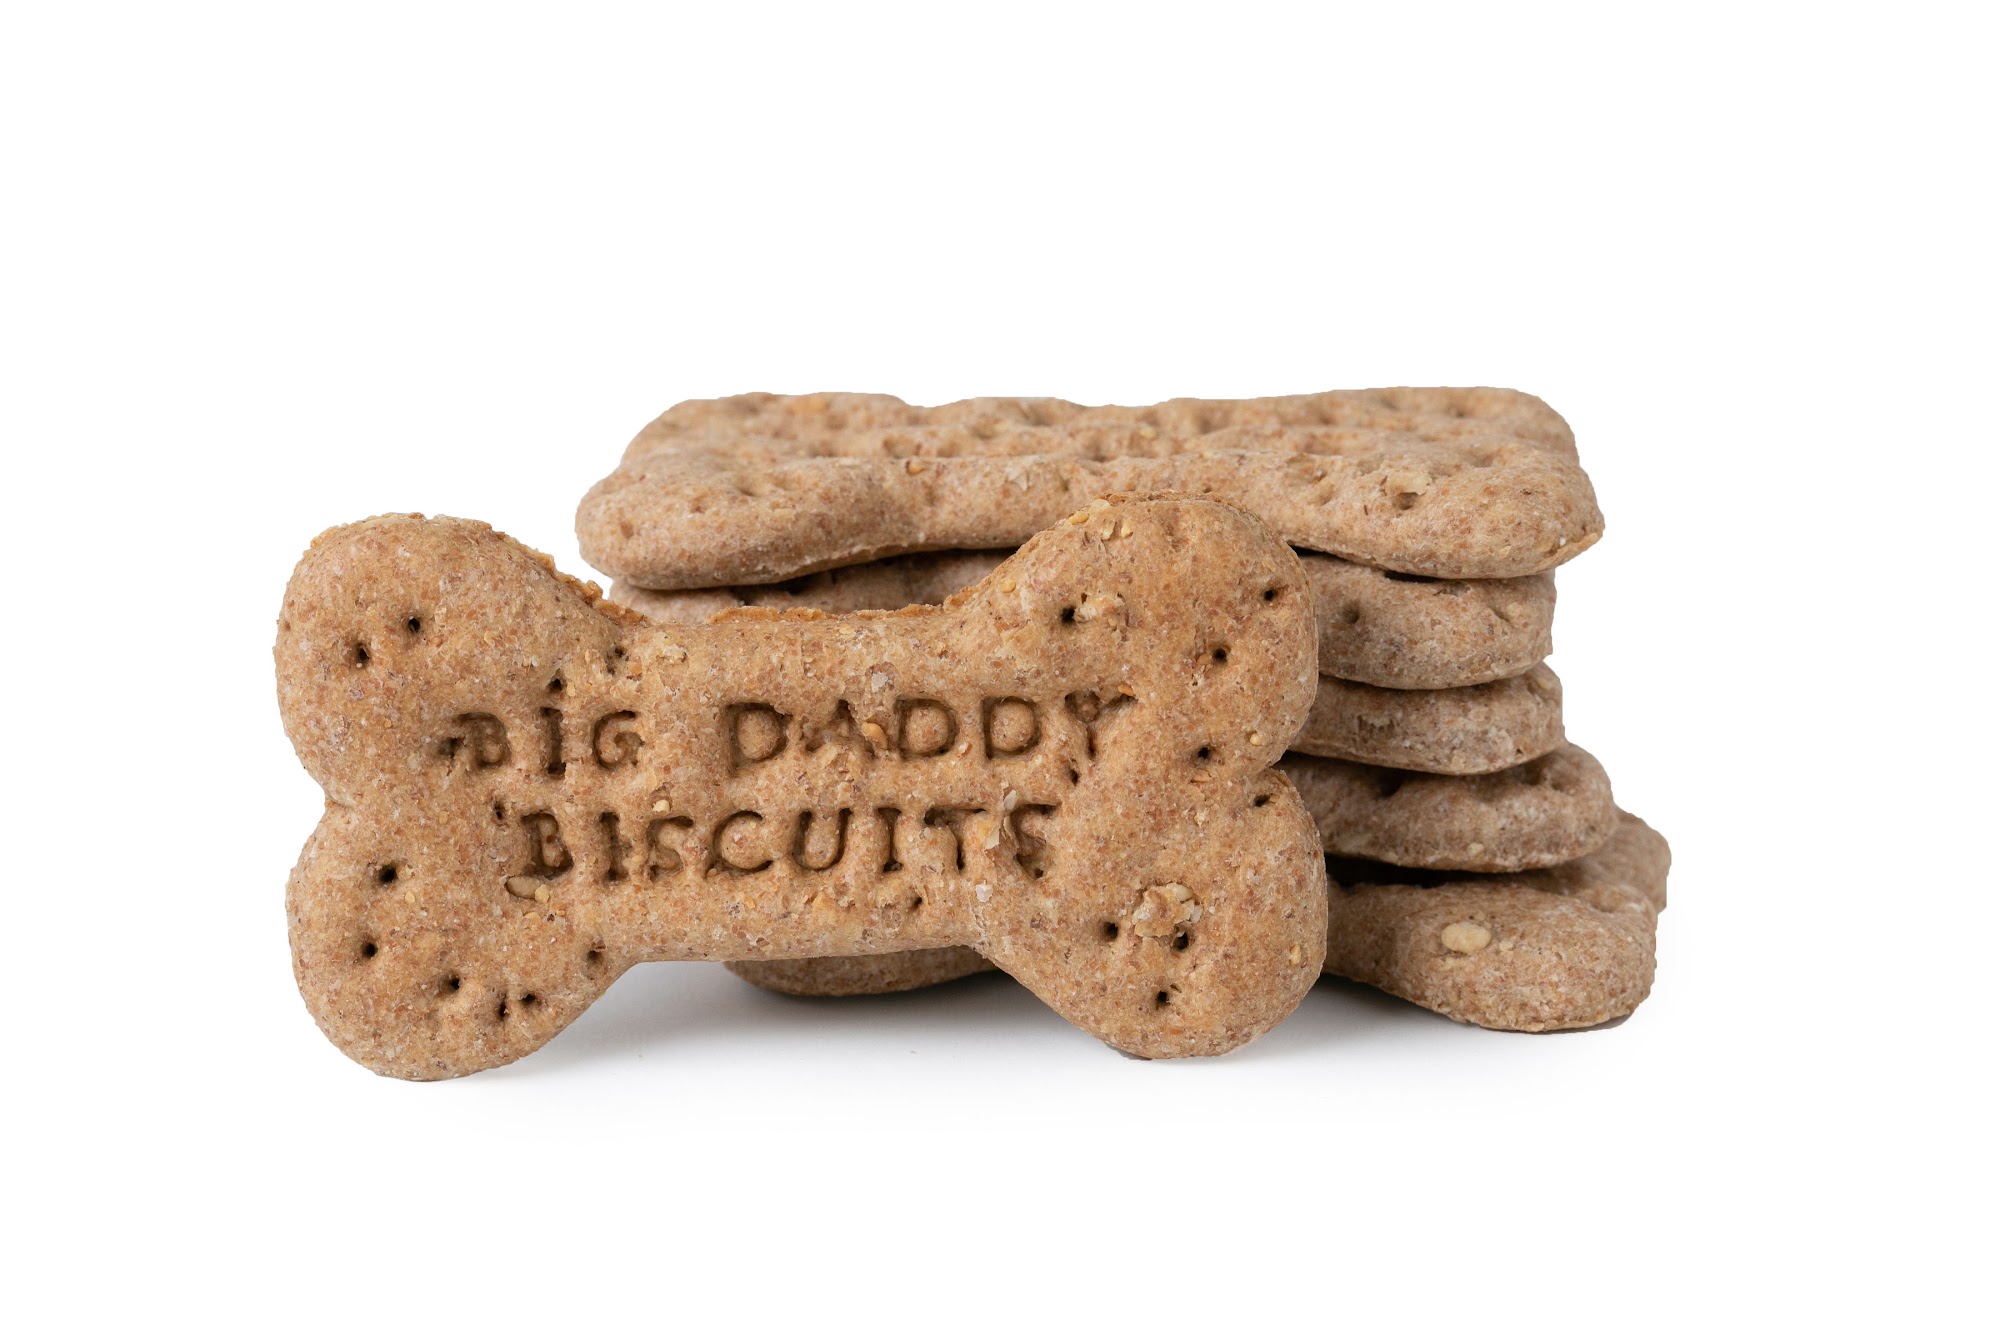 Big Daddy Biscuits, LLC